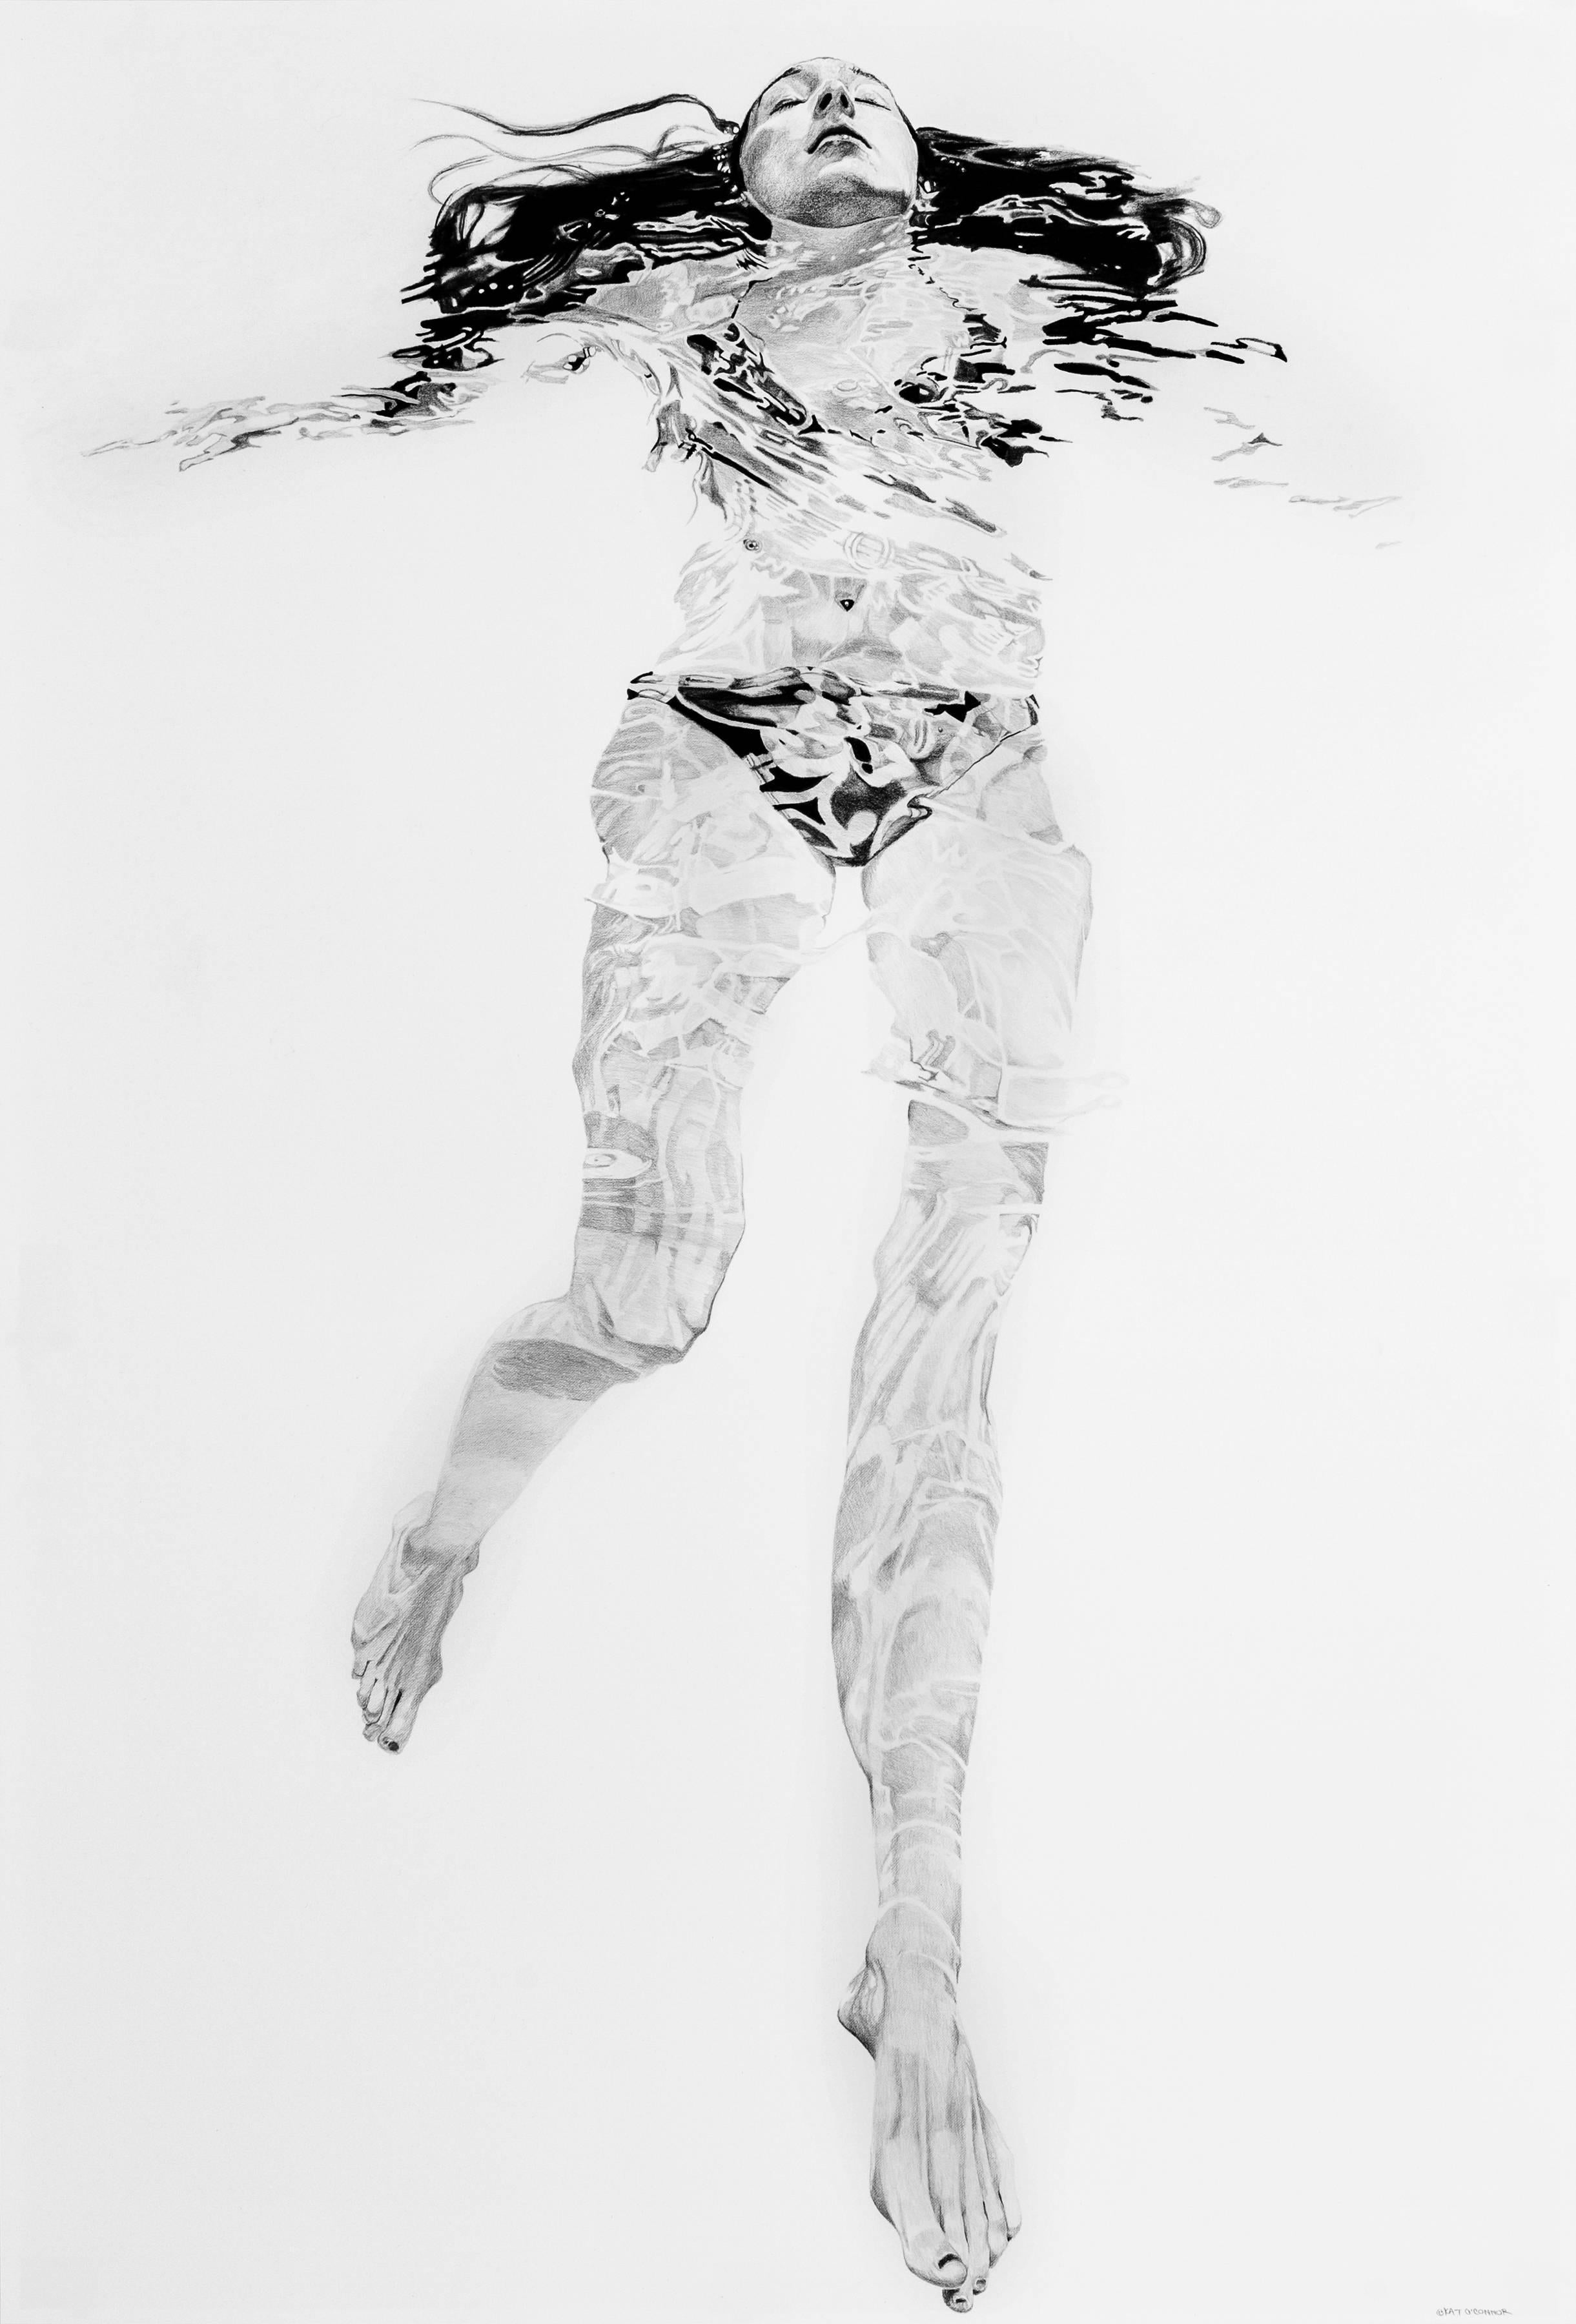 Kat O'Connor Figurative Art - "Like Sleeping, but Underneath" - Underwater Figurative Drawing